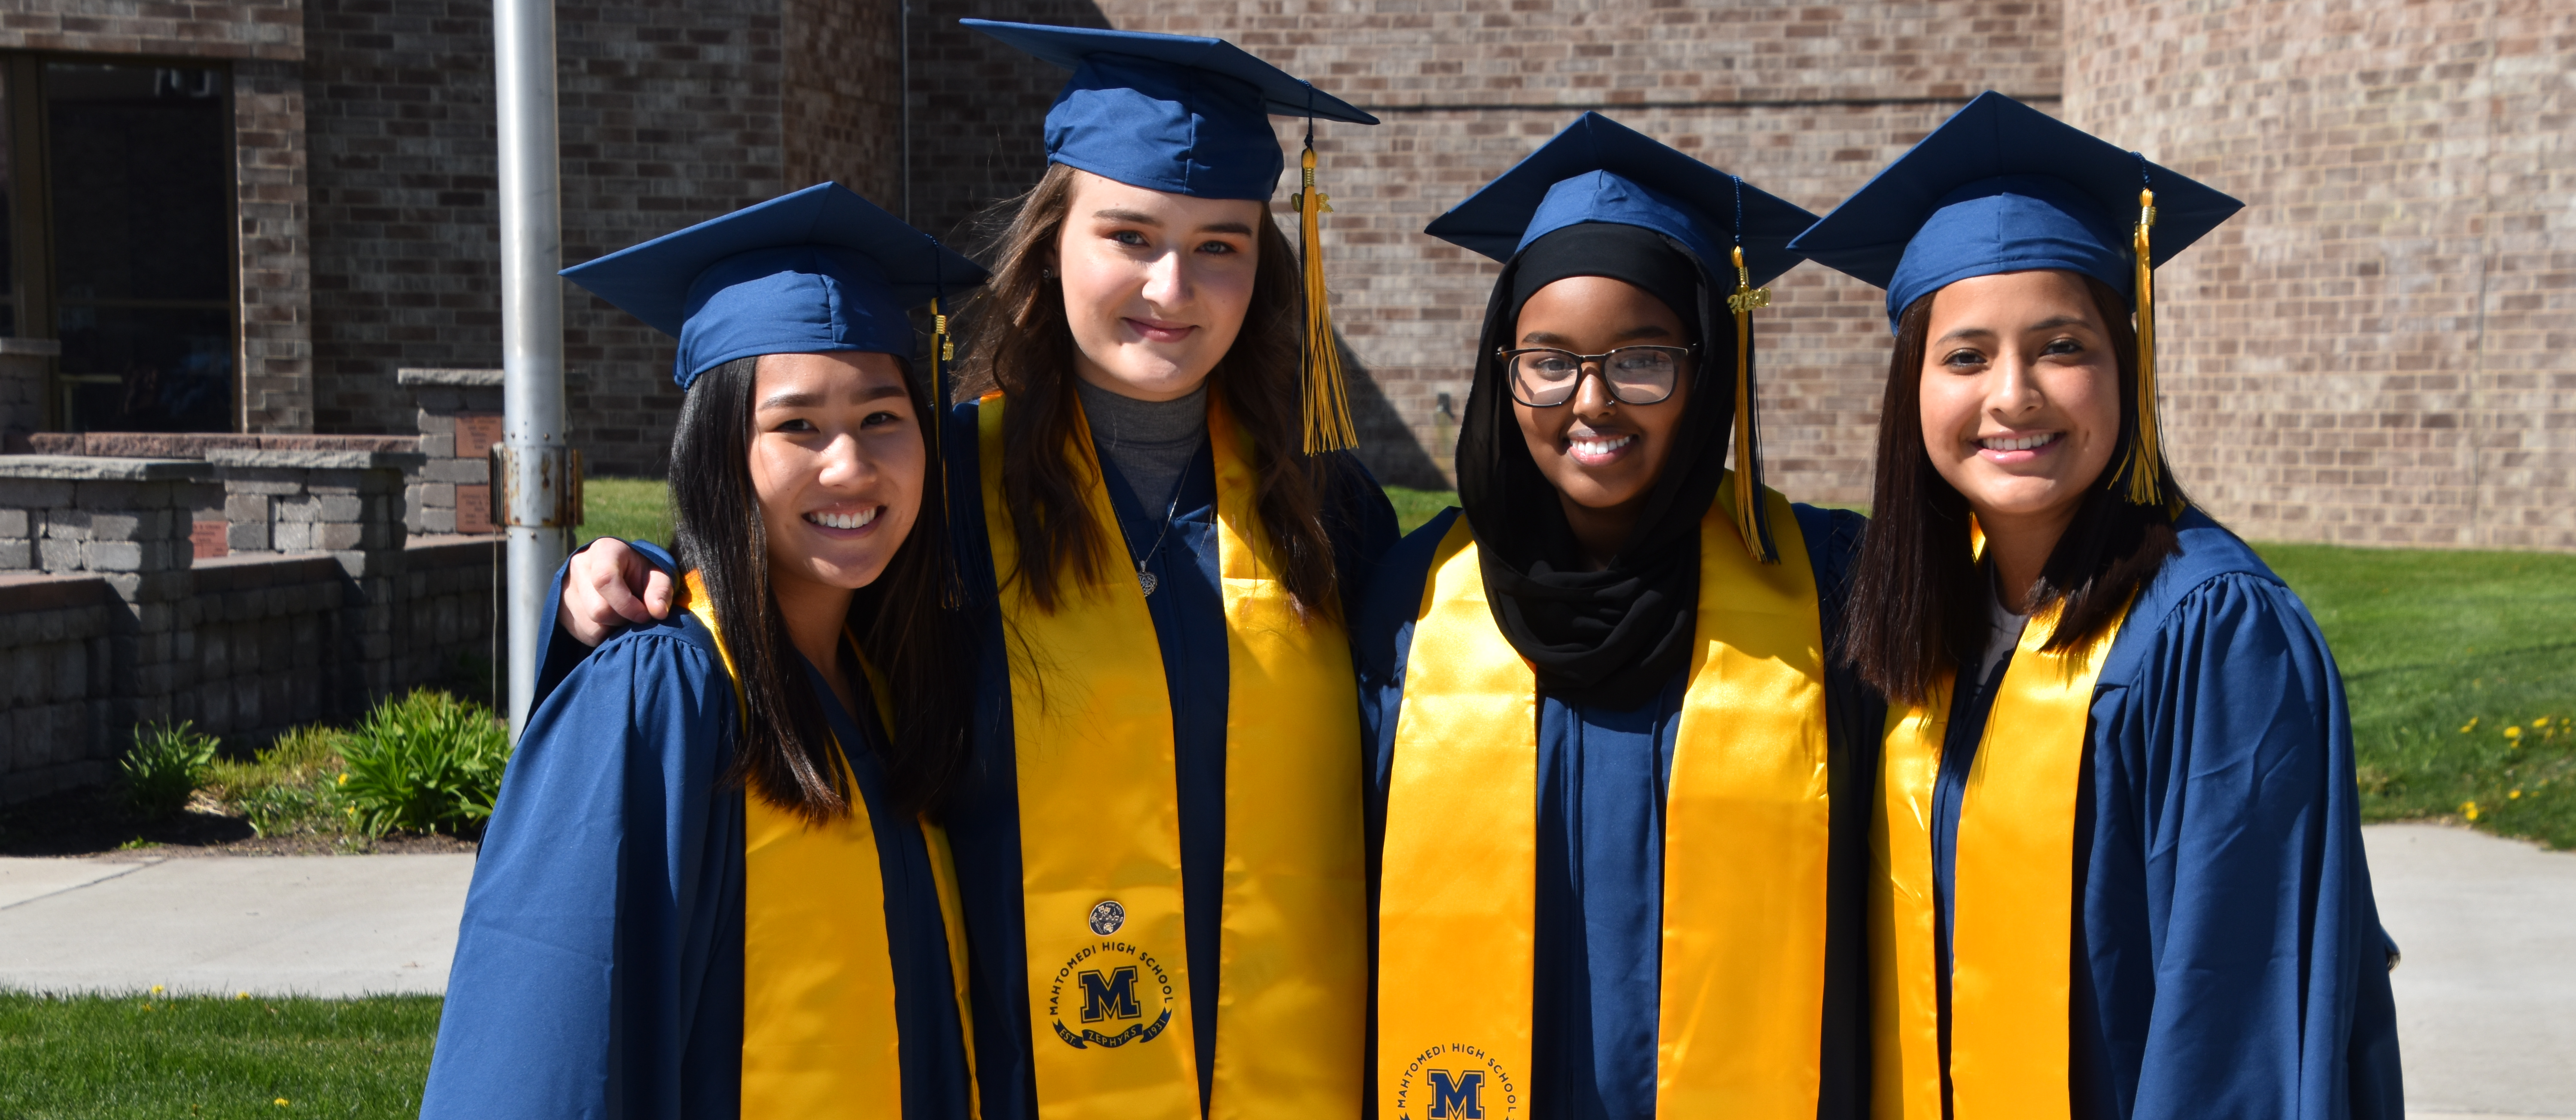 Four graduates standing together